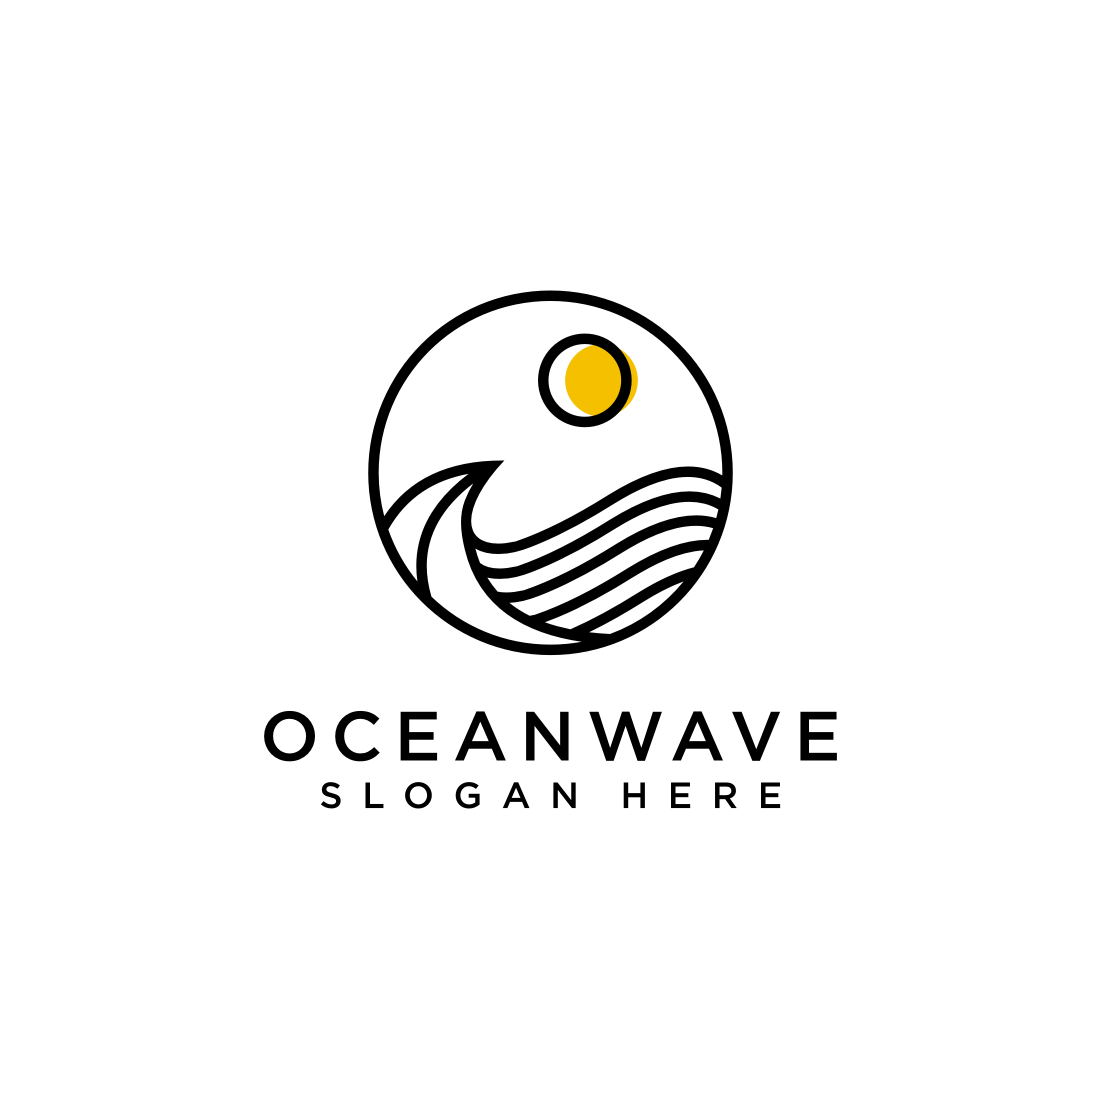 ocean wave logo design vector cover image.